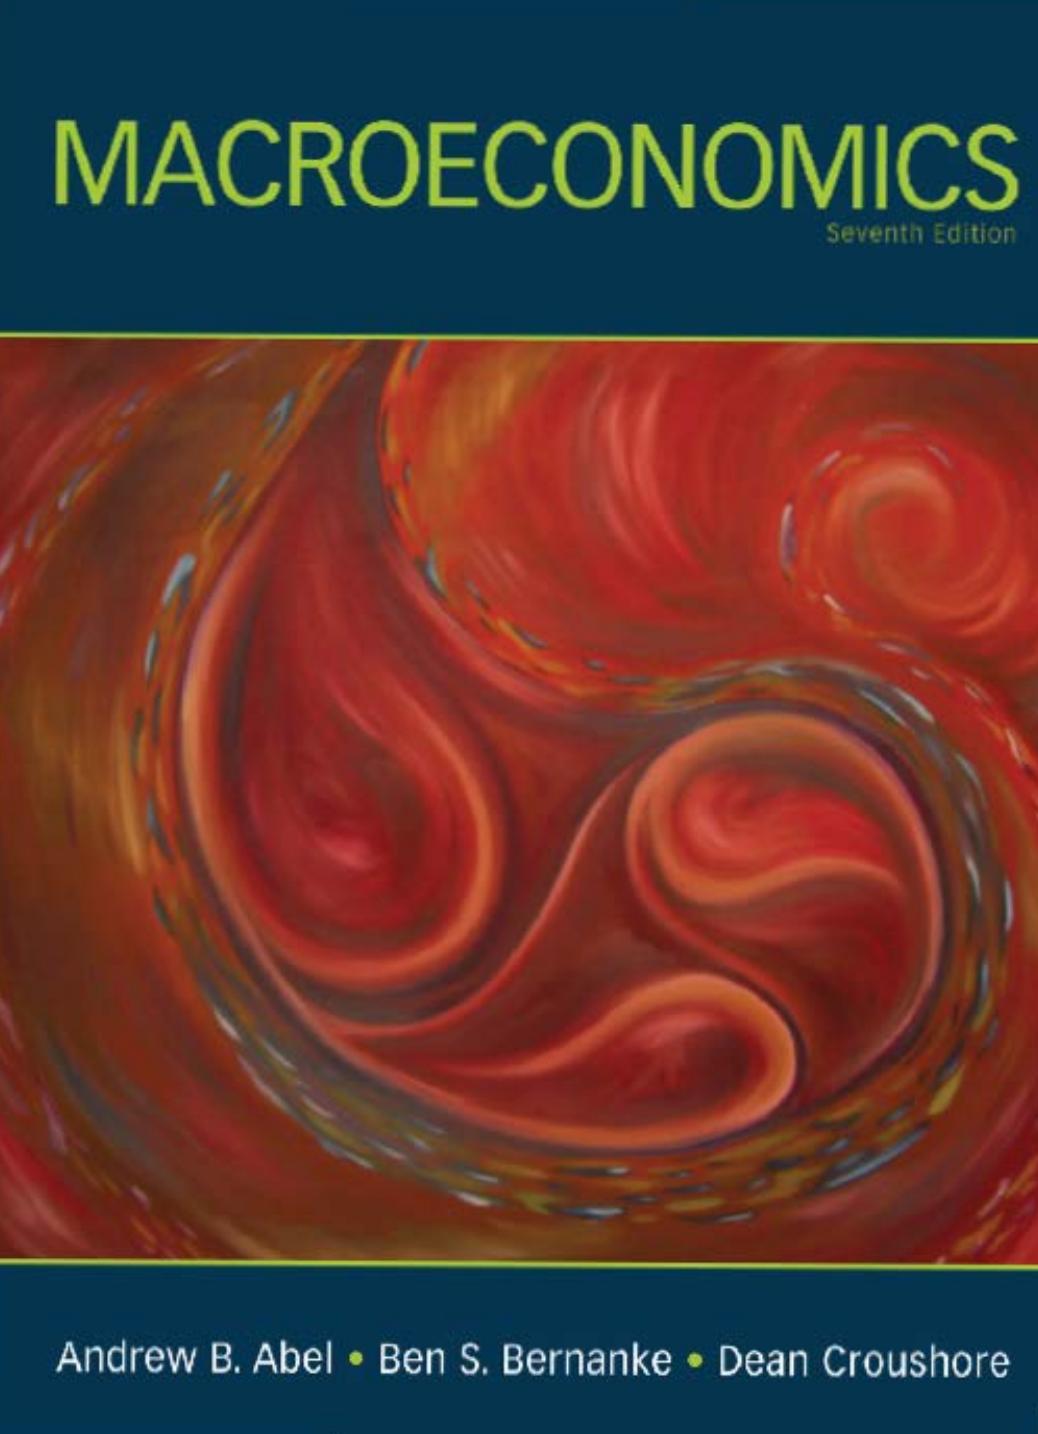 Macroeconomics 7th Edition 2016